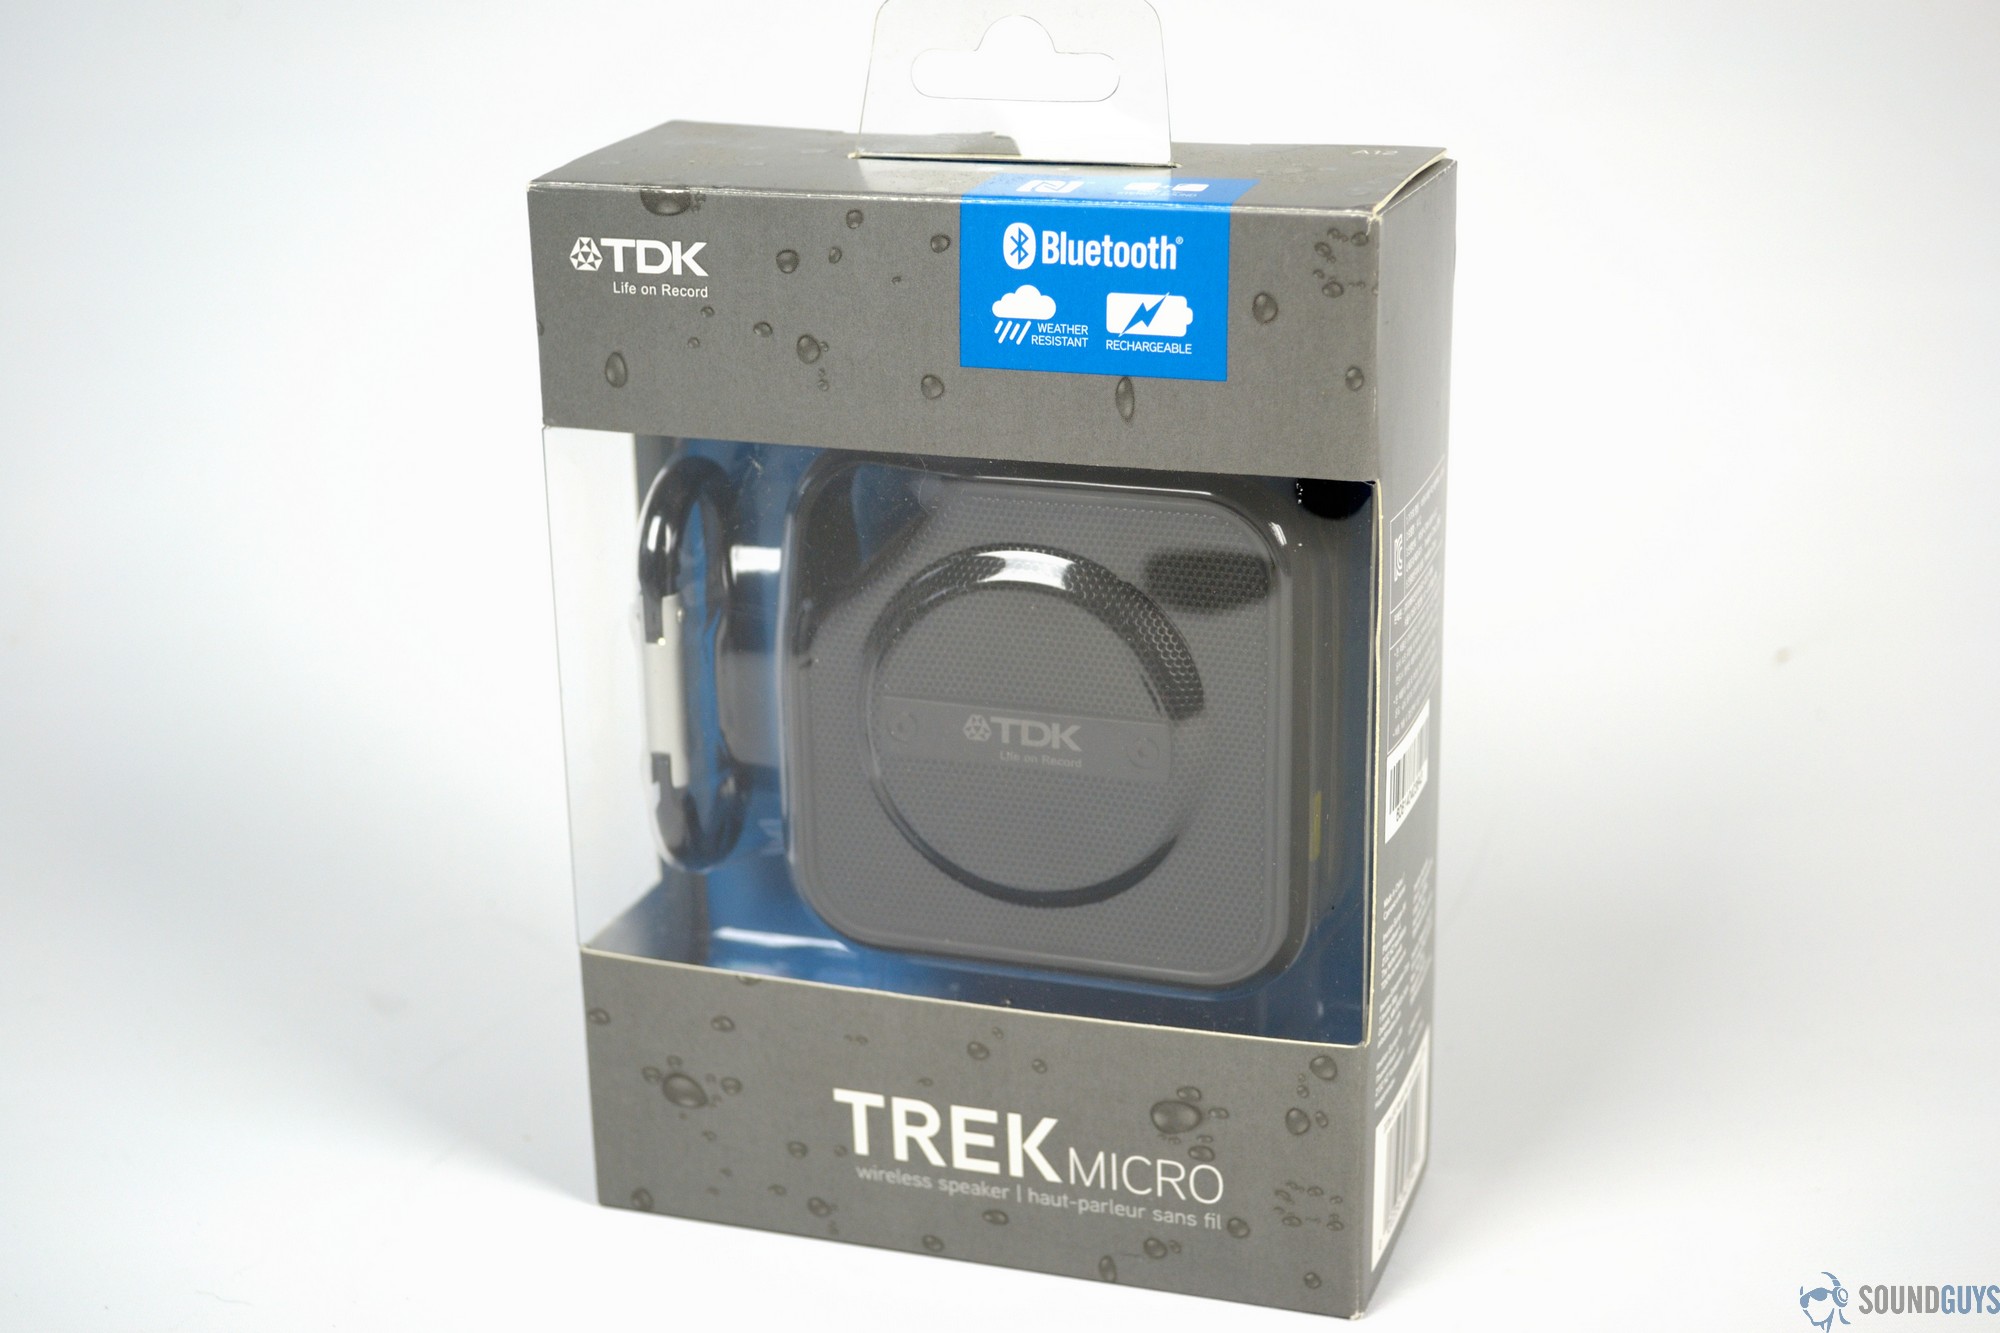 tdk-trek-micro-sg-01